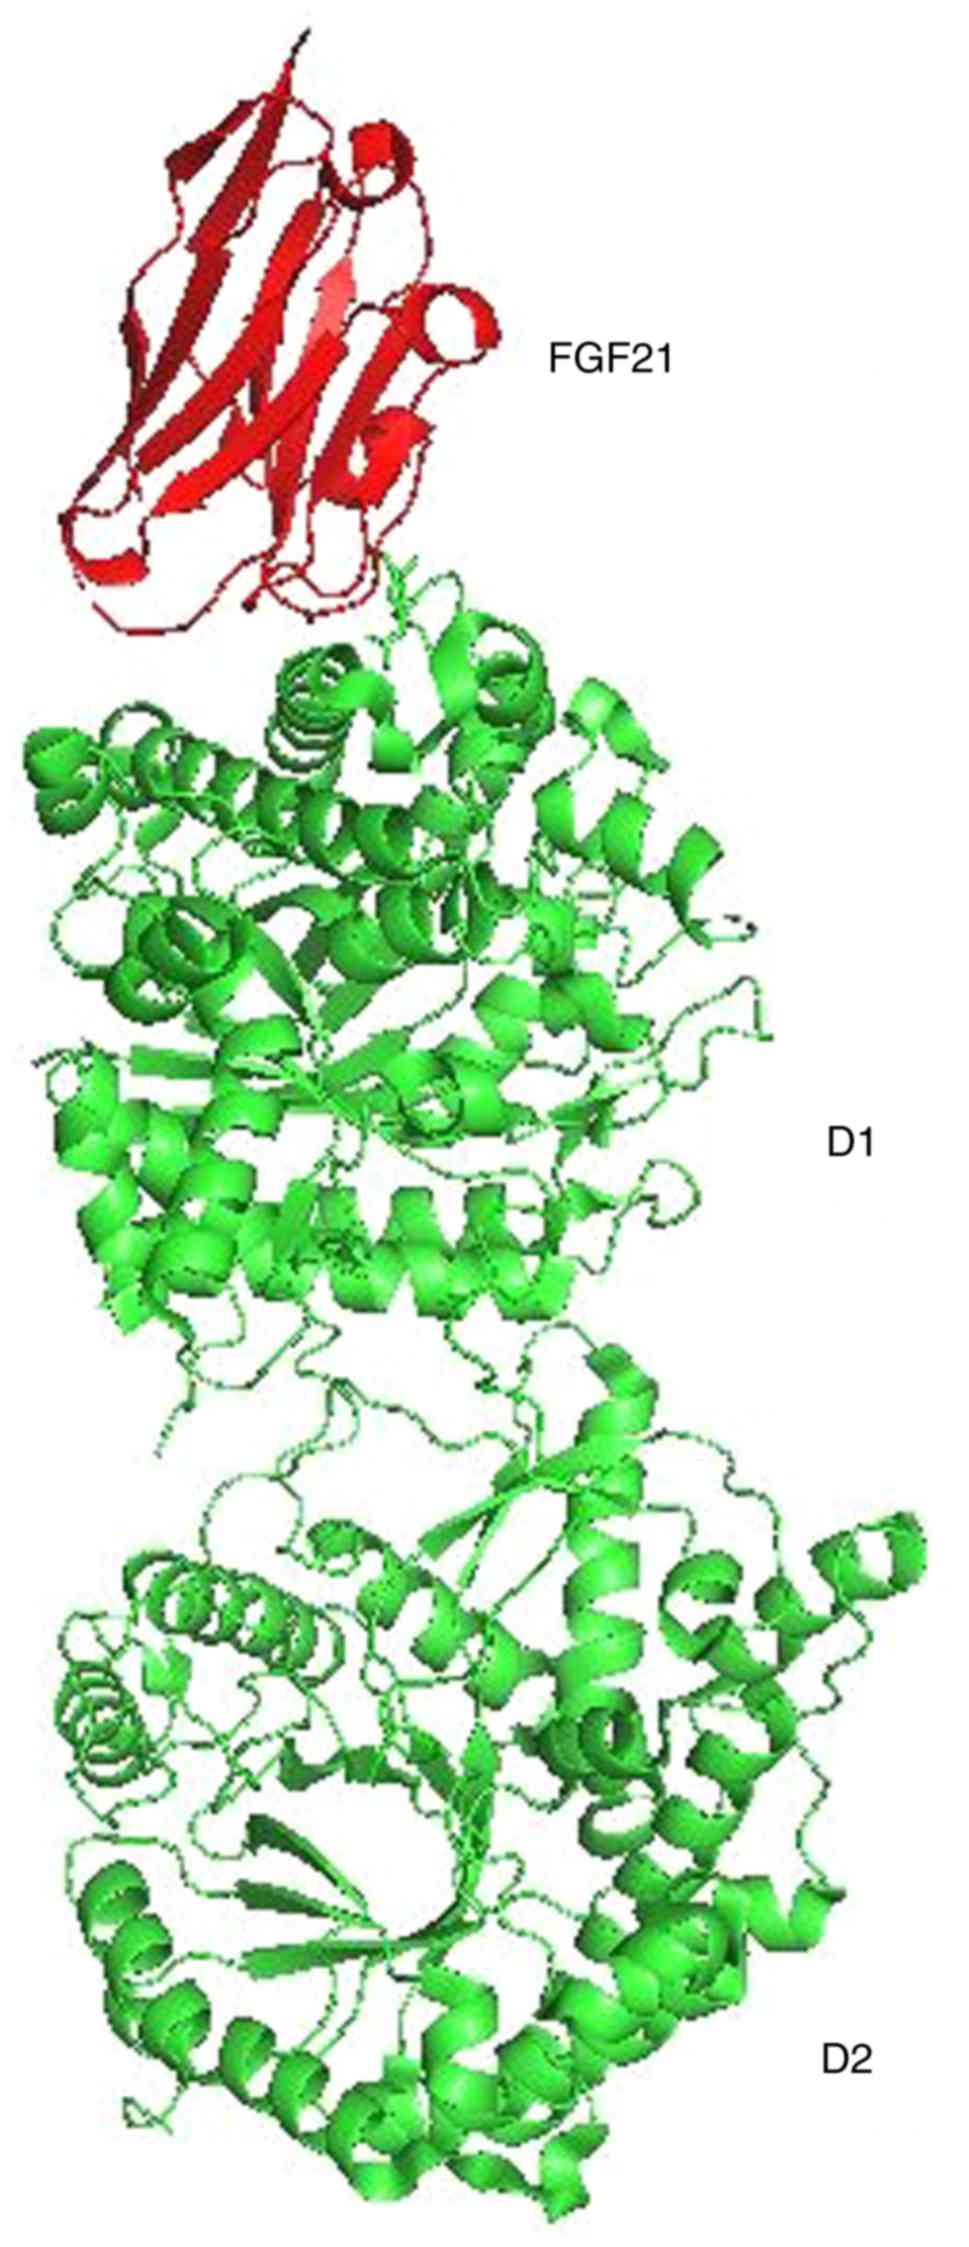 pymol peptide backbone alignment